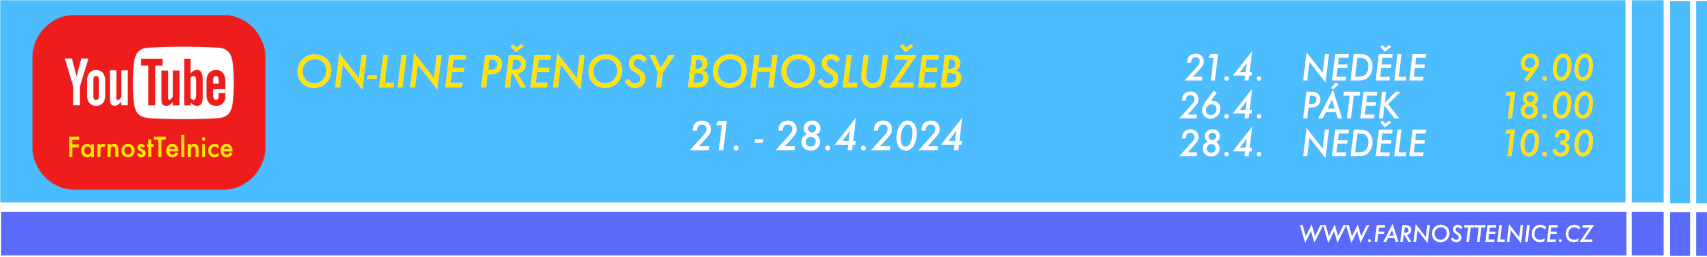 Broadcast-title:porad-bohosluzeb 21.-28.4.2024-web.png